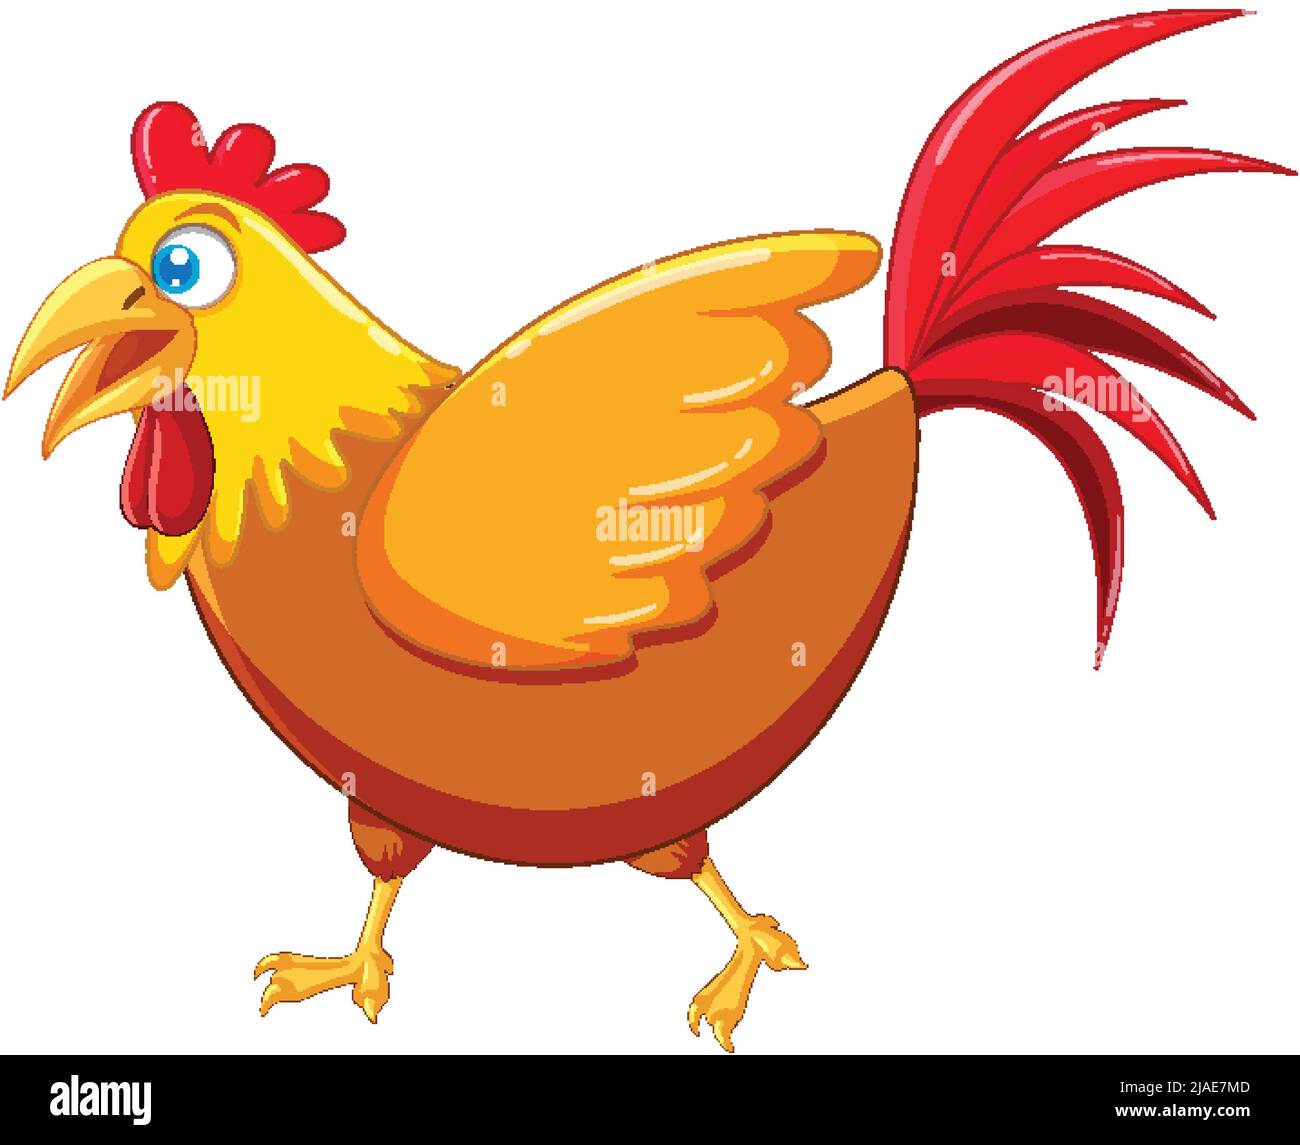 A chicken cartoon character illustration Stock Vector Image & Art - Alamy